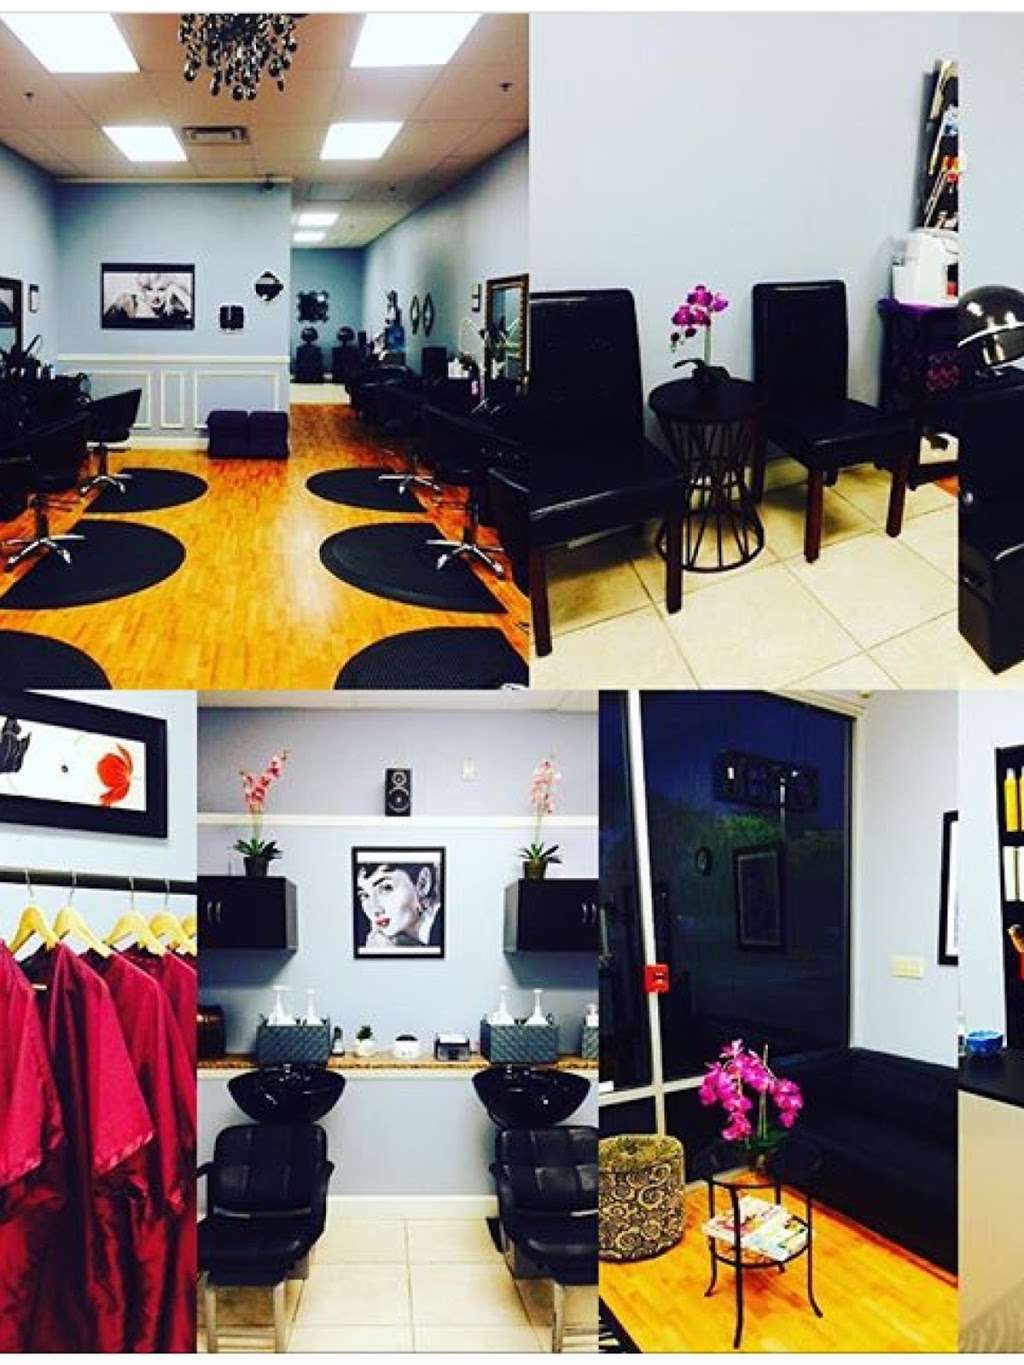 The Beauty Box Hair Salon | 3020 Lamberton Blvd, Orlando, FL 32825 | Phone: (407) 658-4333